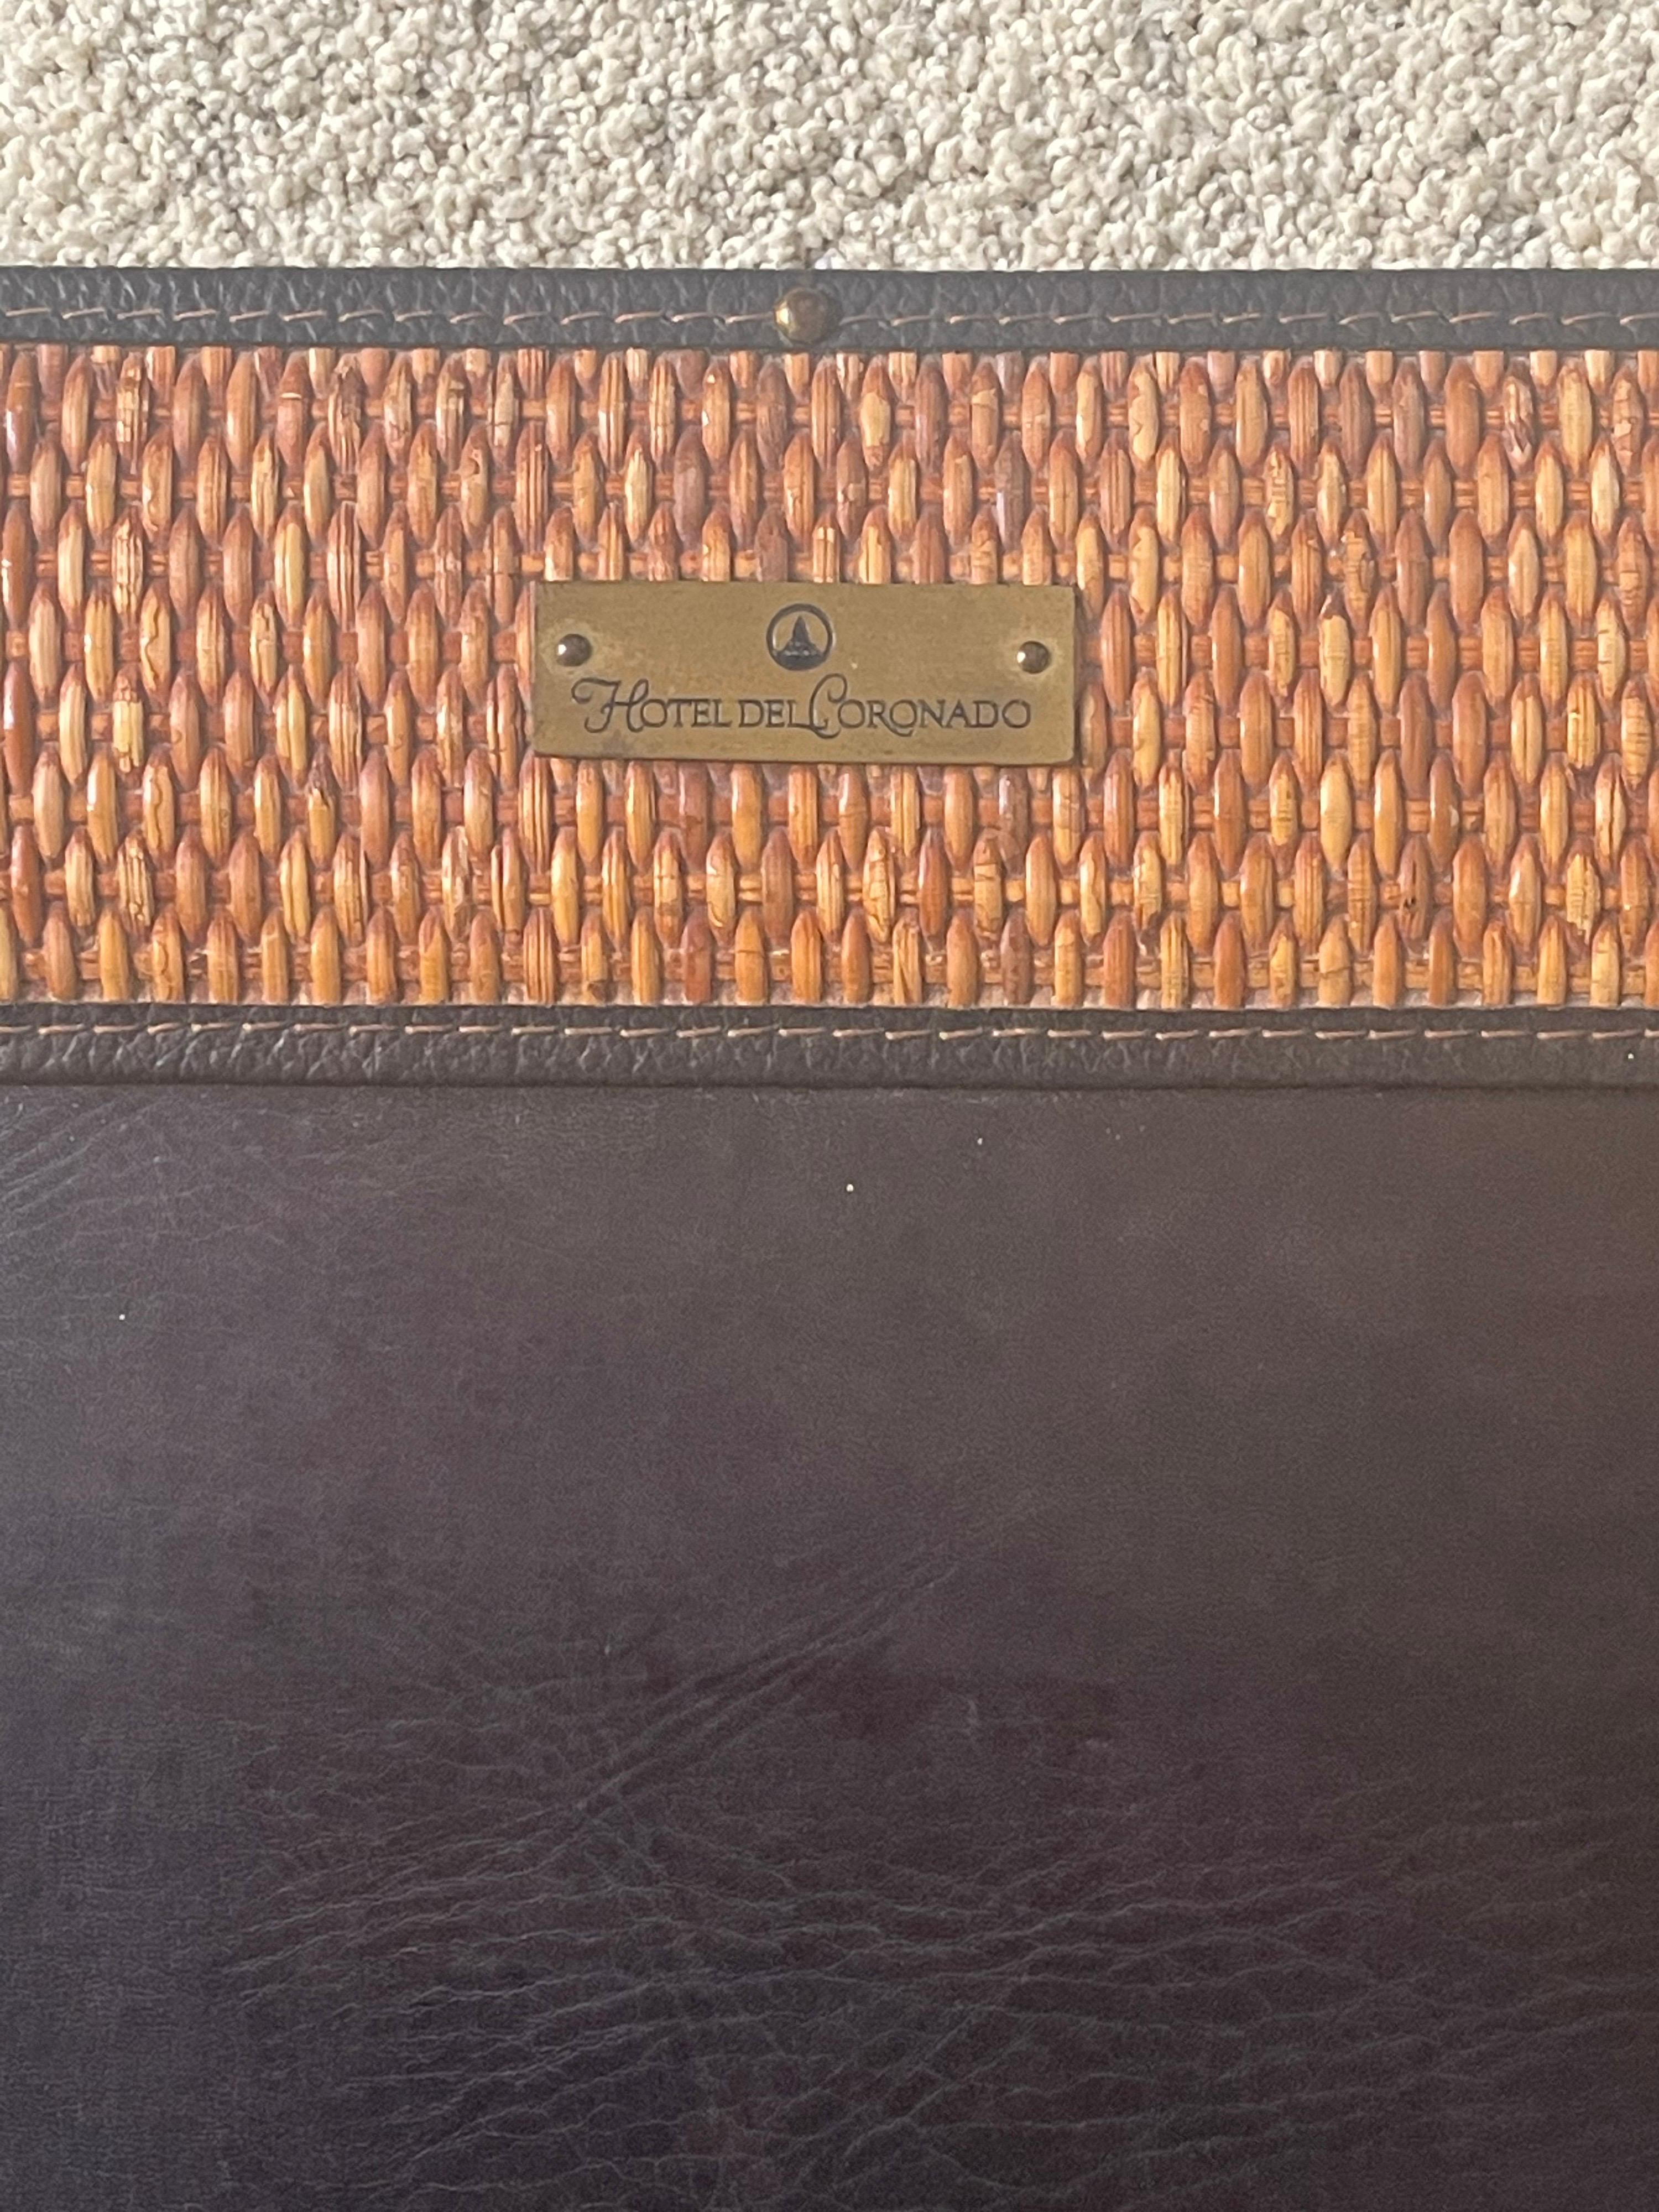 American Vintage Hotel del Coronado Leather and Cane Desk Blotter